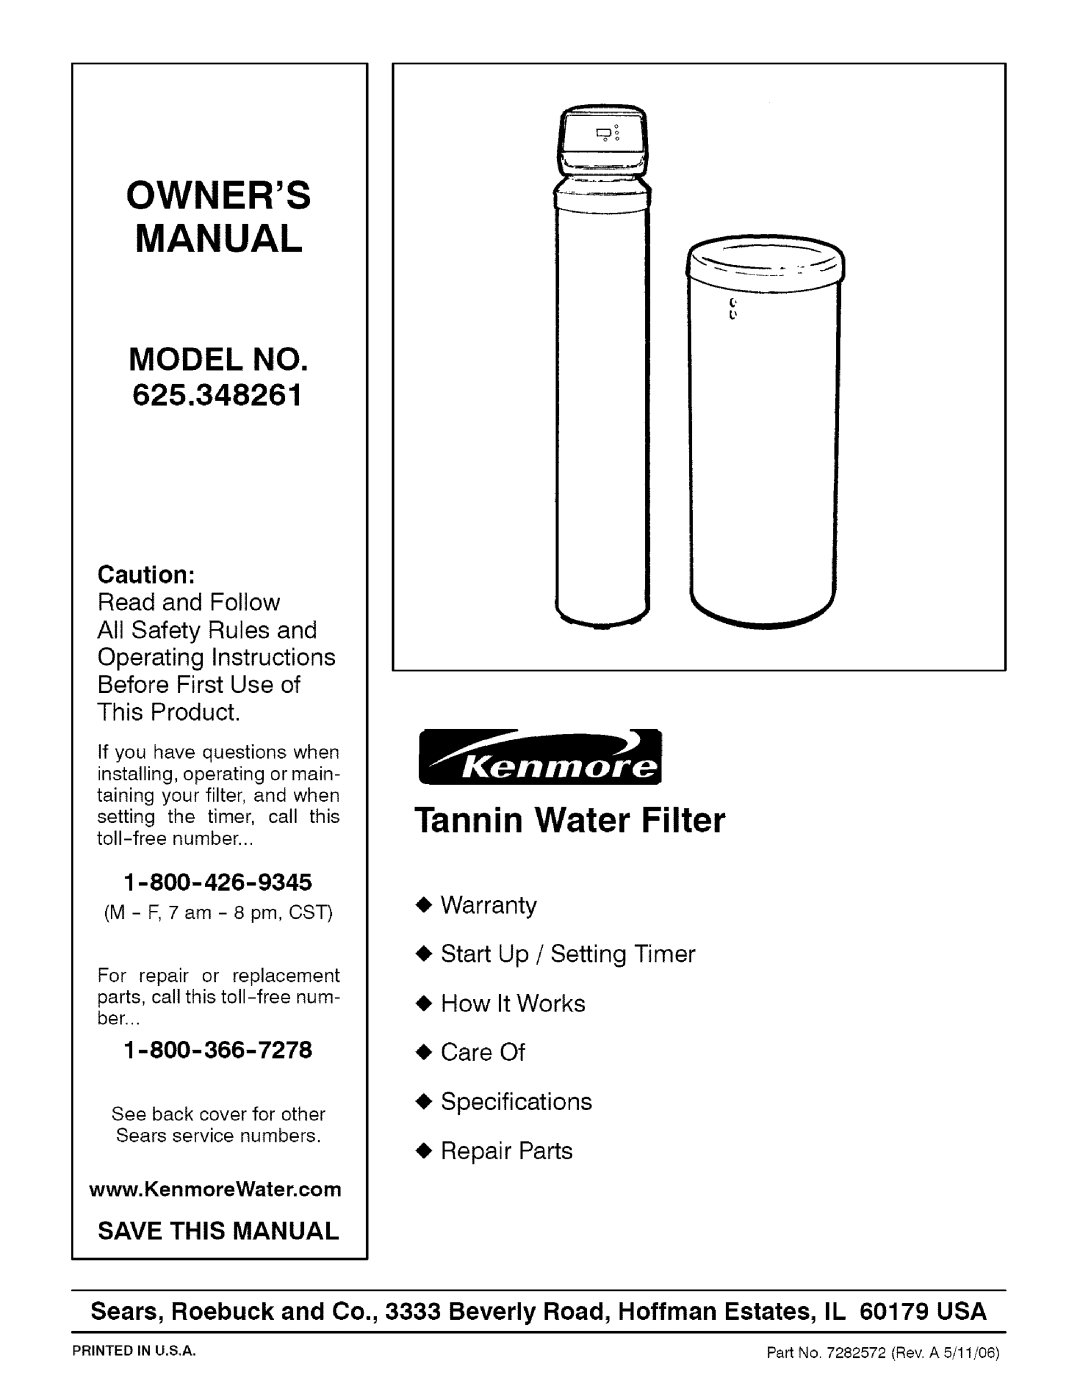 Kenmore 625.348261 owner manual Model No, Save This Manual, Tannin Water Filter 